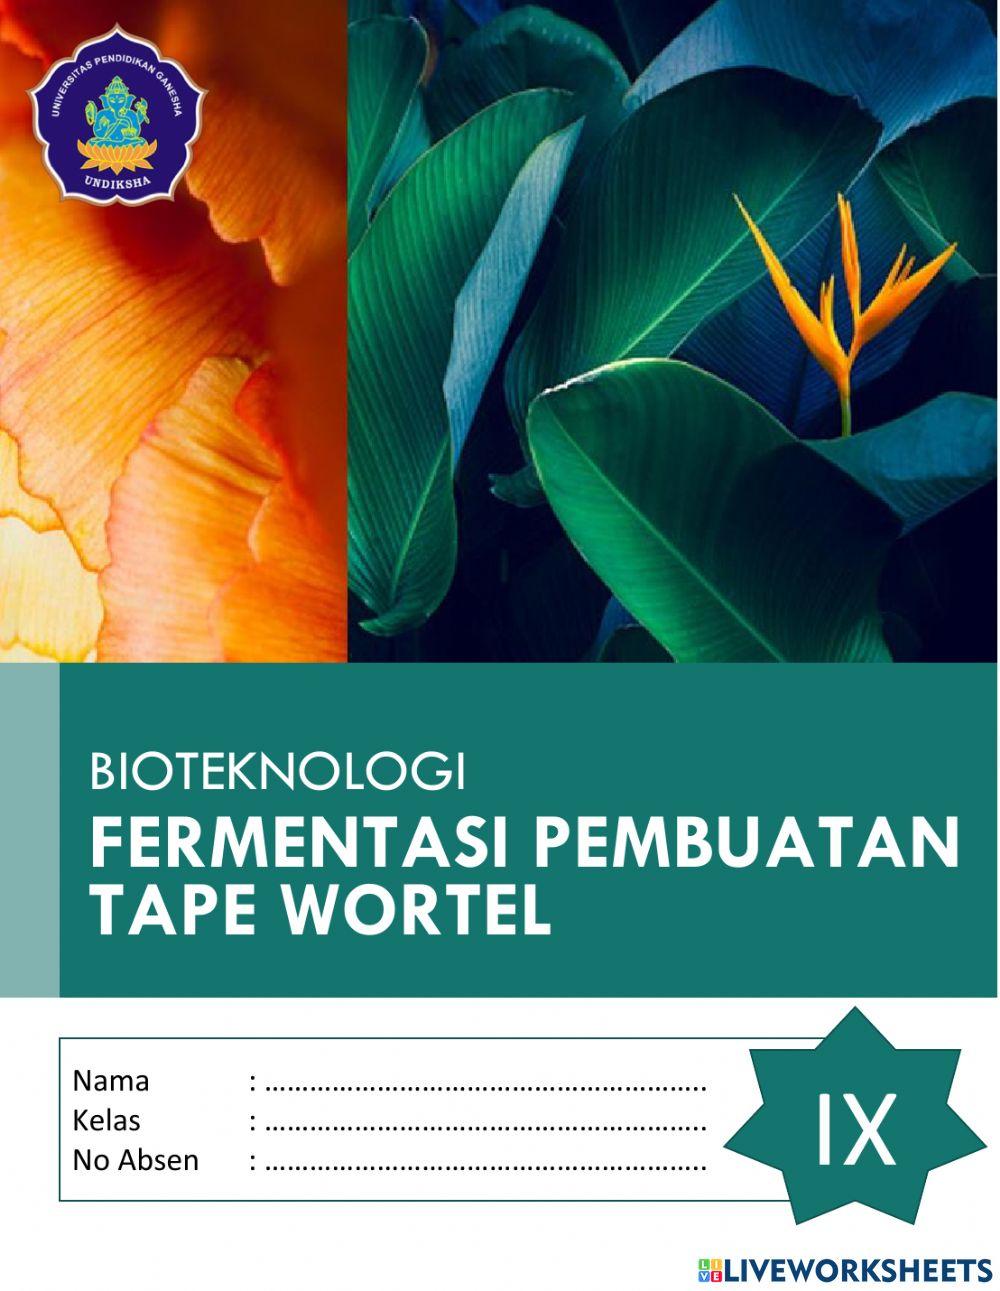 Bioteknologi Tape Wortel